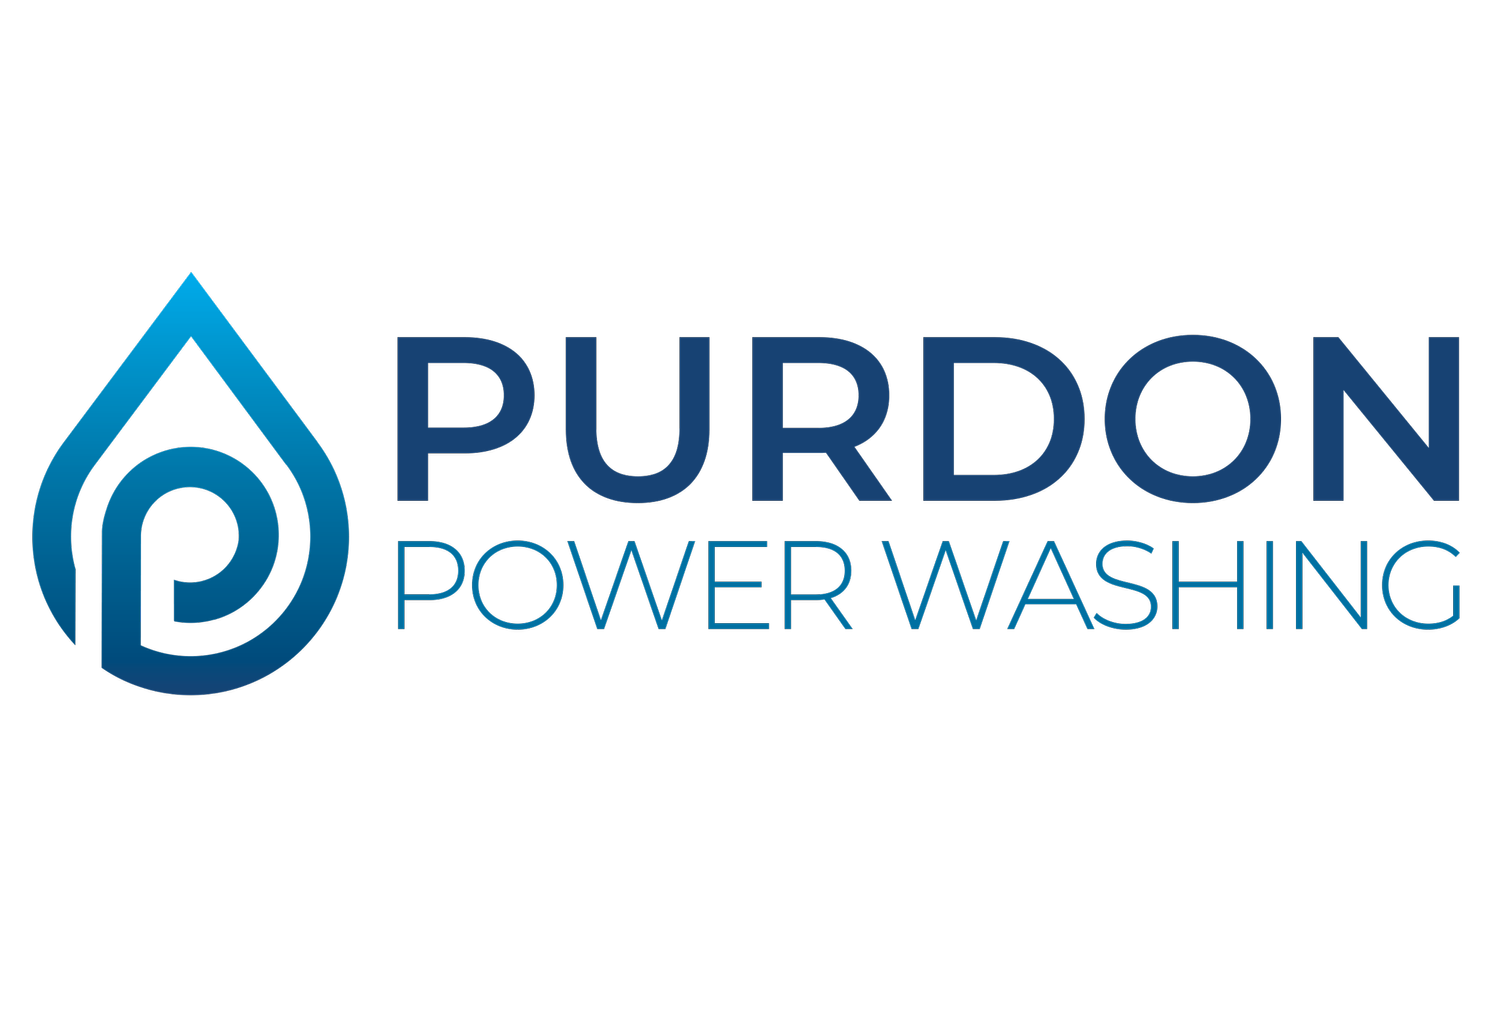 Purdon Power Washing